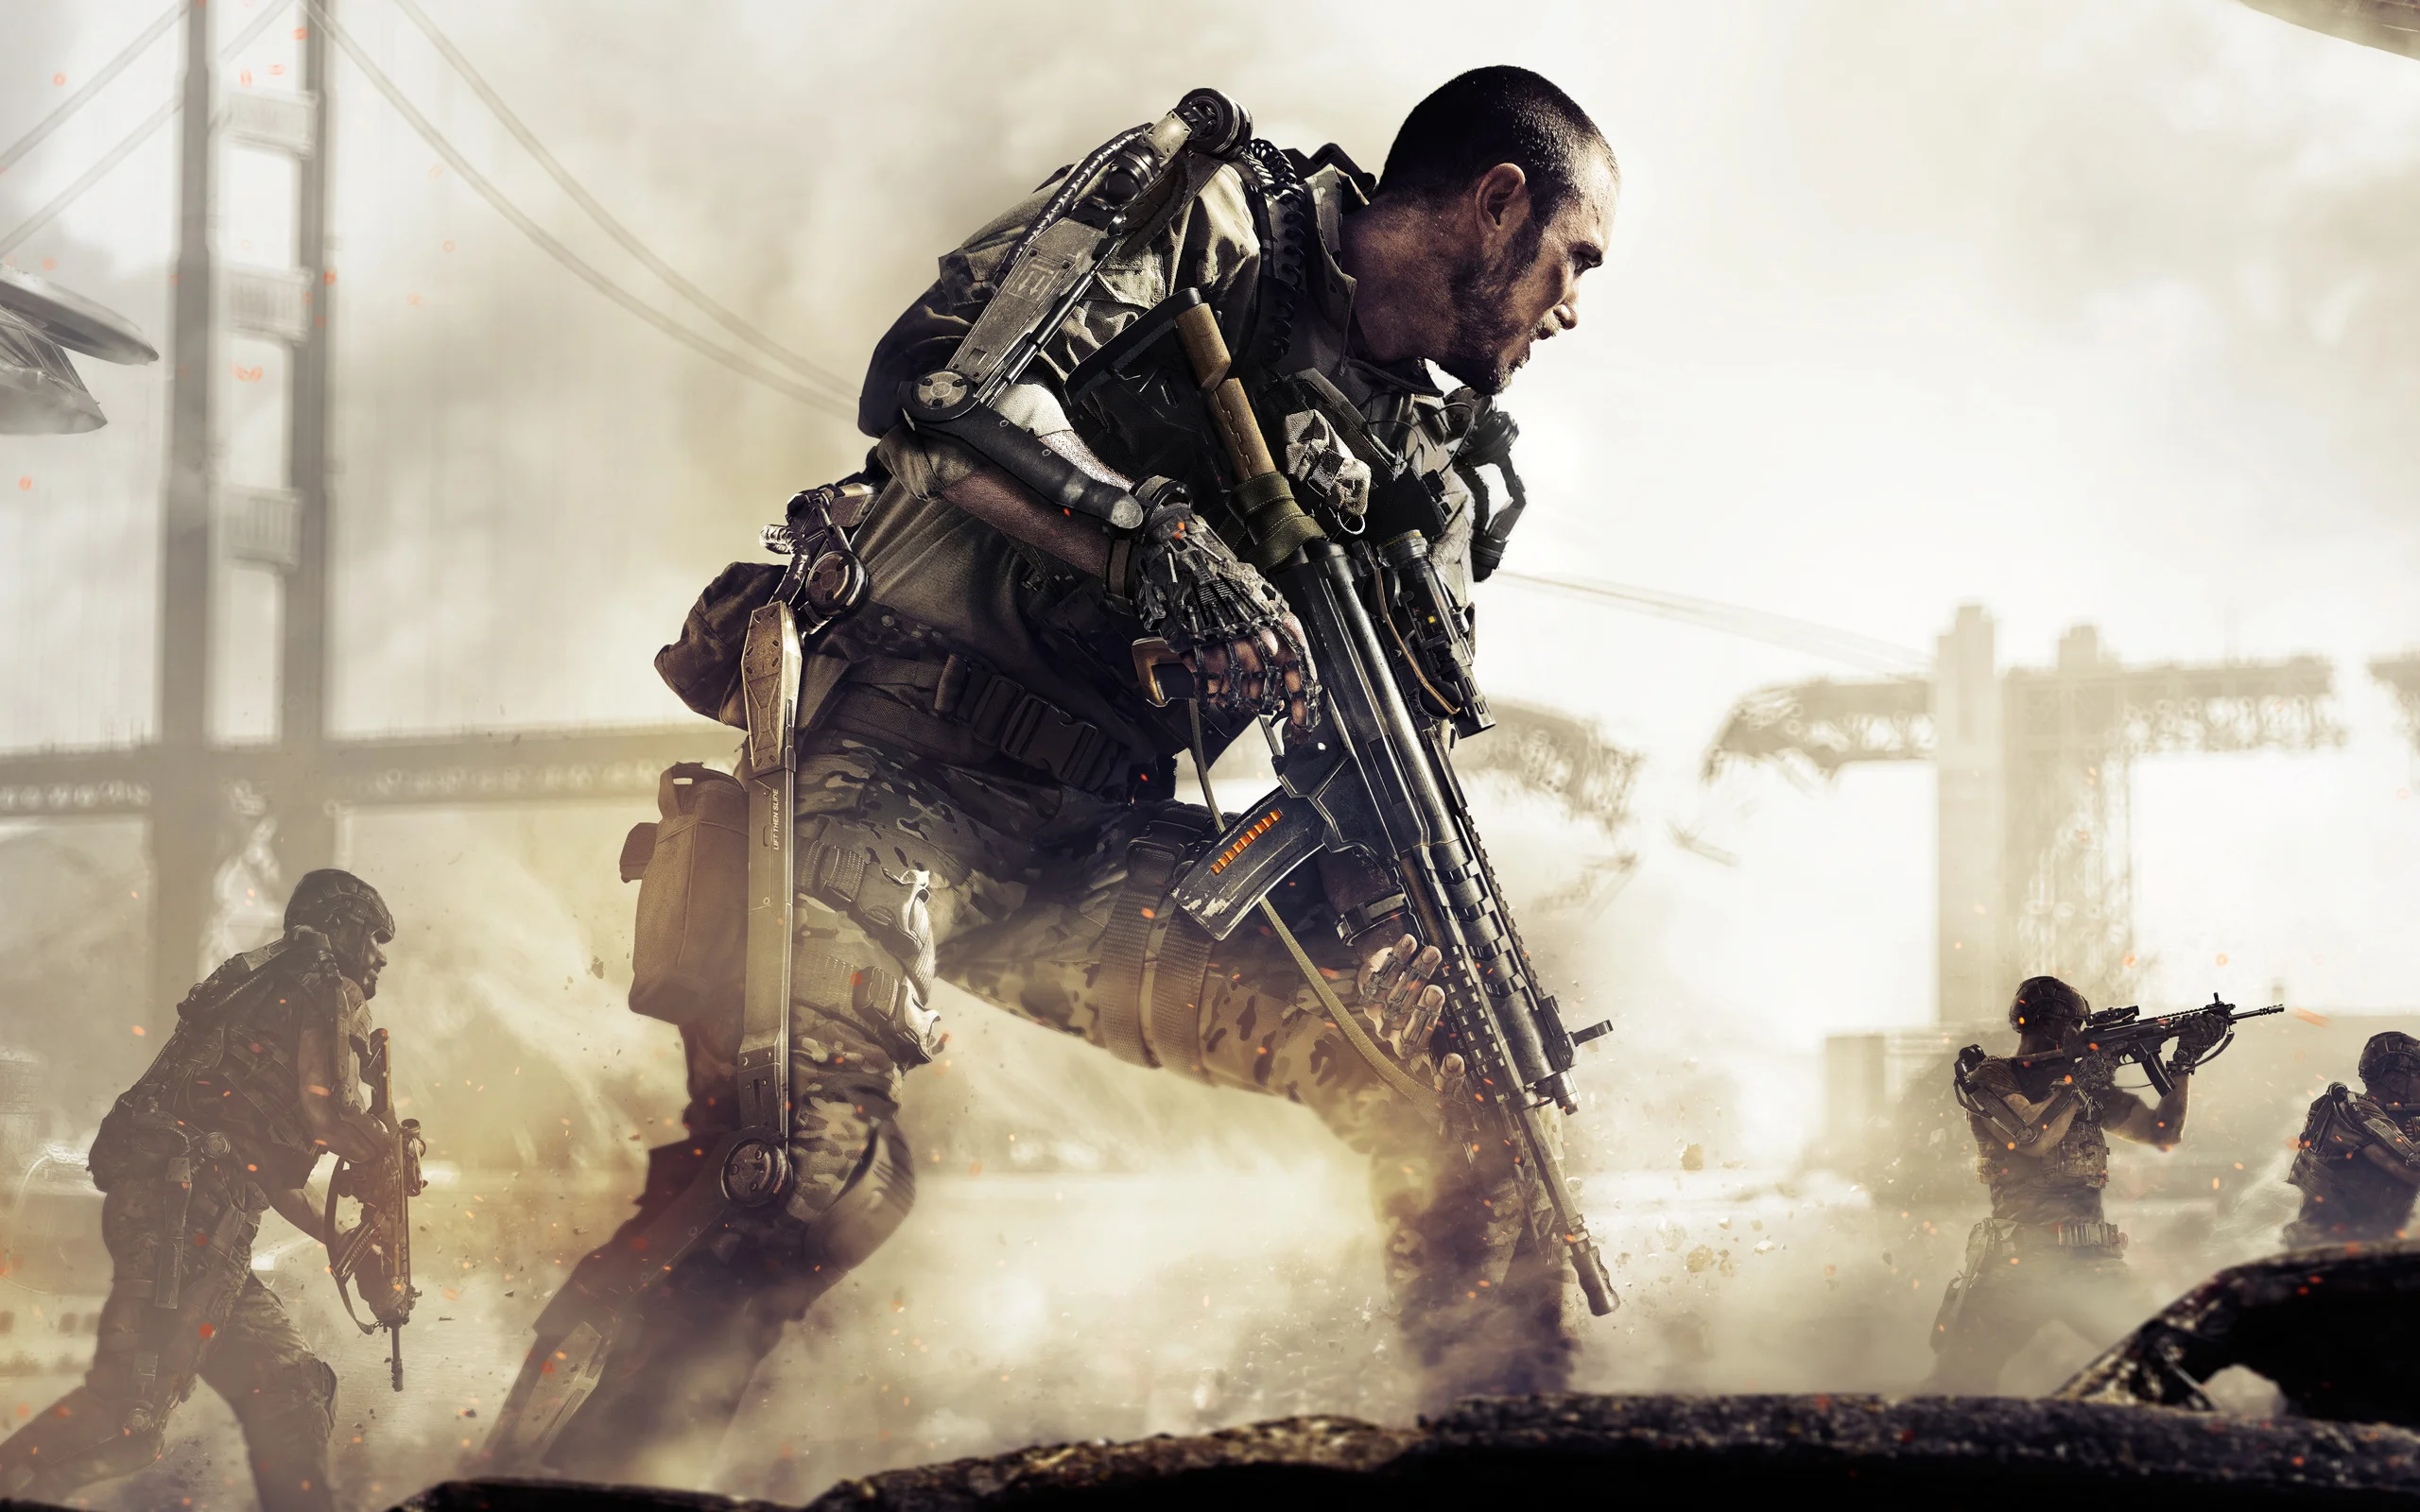 Call of Duty: Advanced Warfare PC Port Impressions